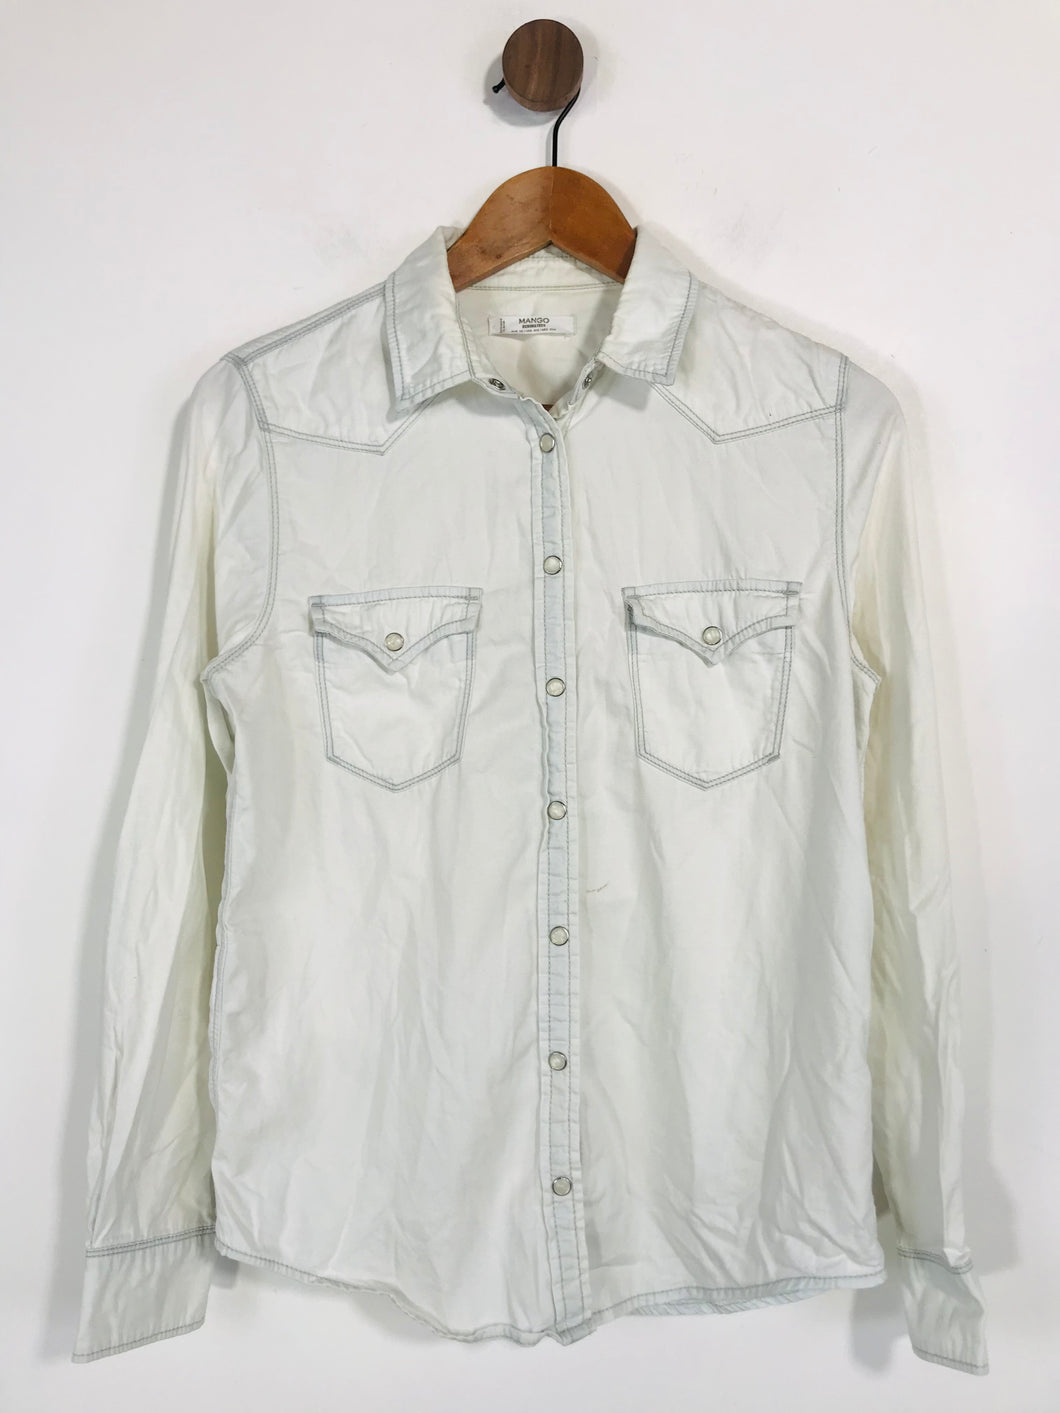 Mango Women's Cotton Button-Up Shirt | XS UK6-8 | White